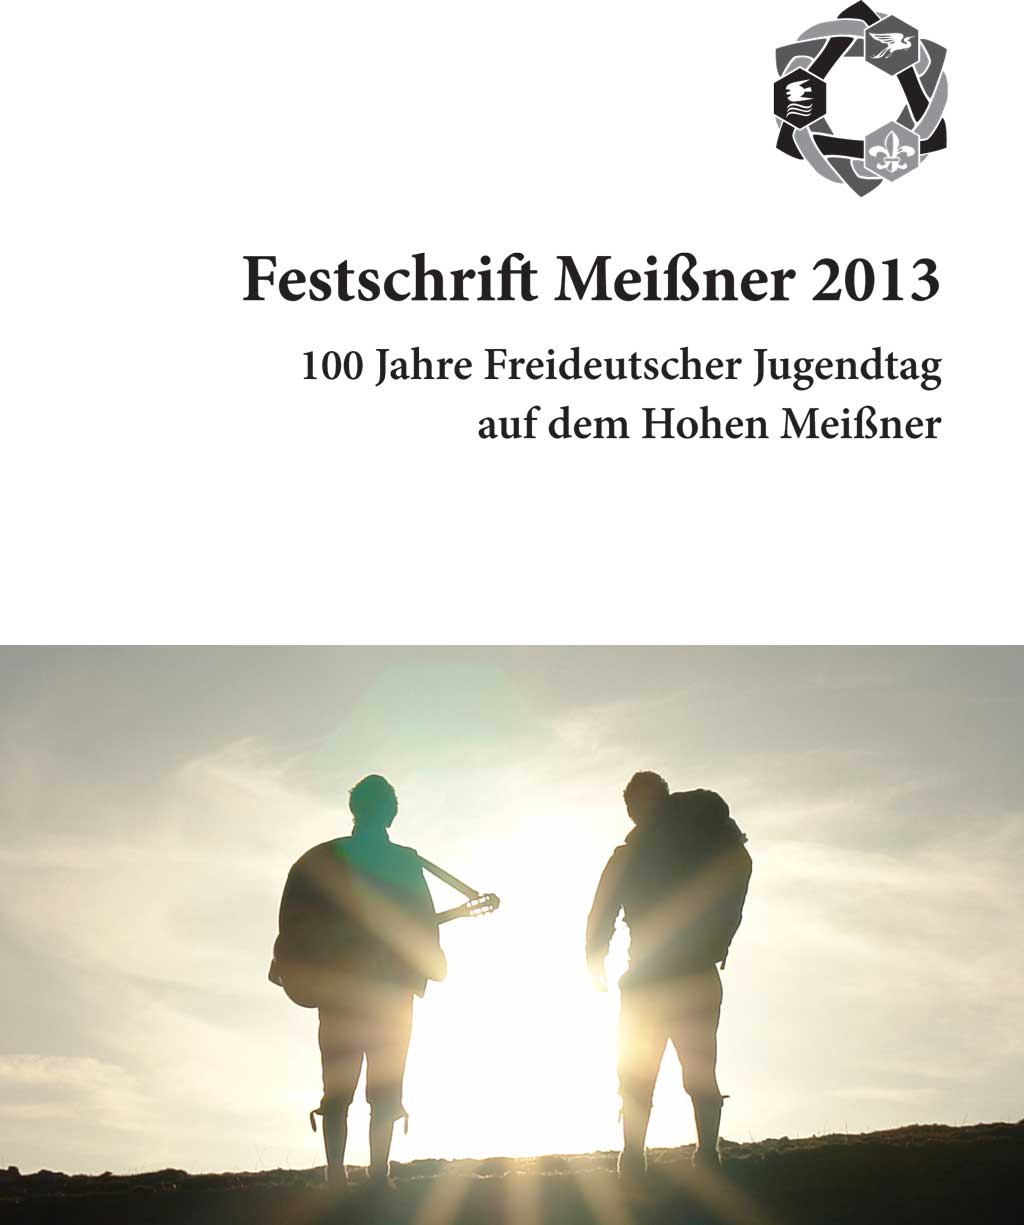 Festschrift-Meißner-2013---Titel